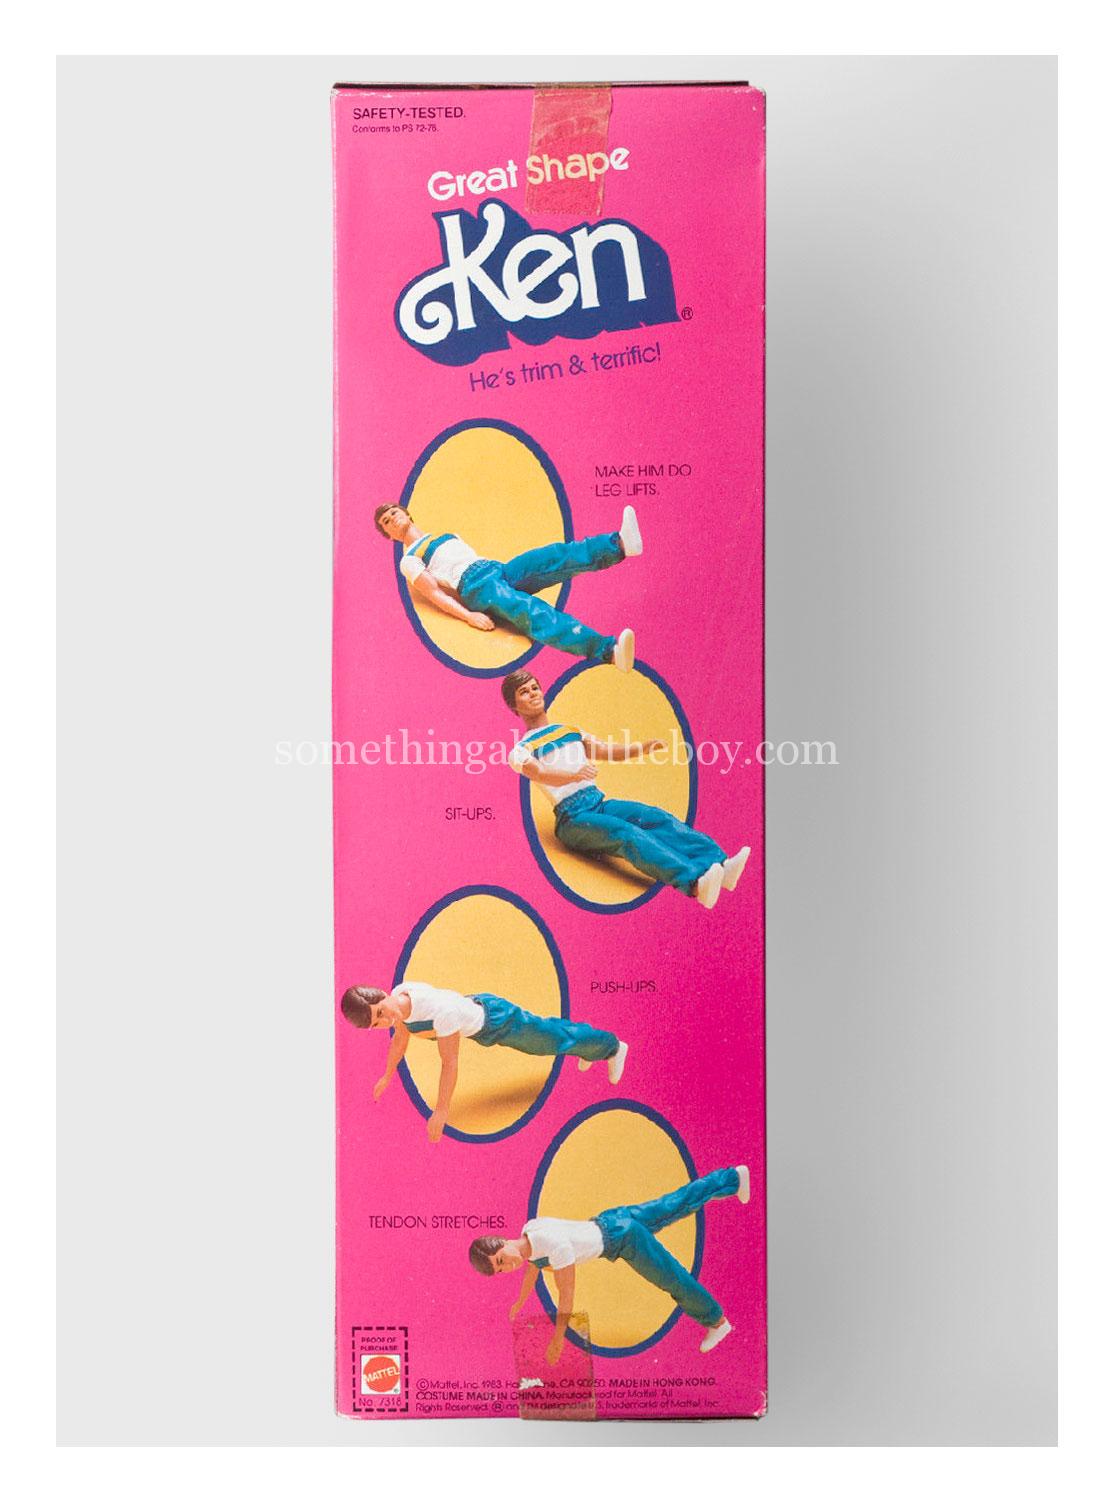 1984 #7318 Great Shape Ken original packaging